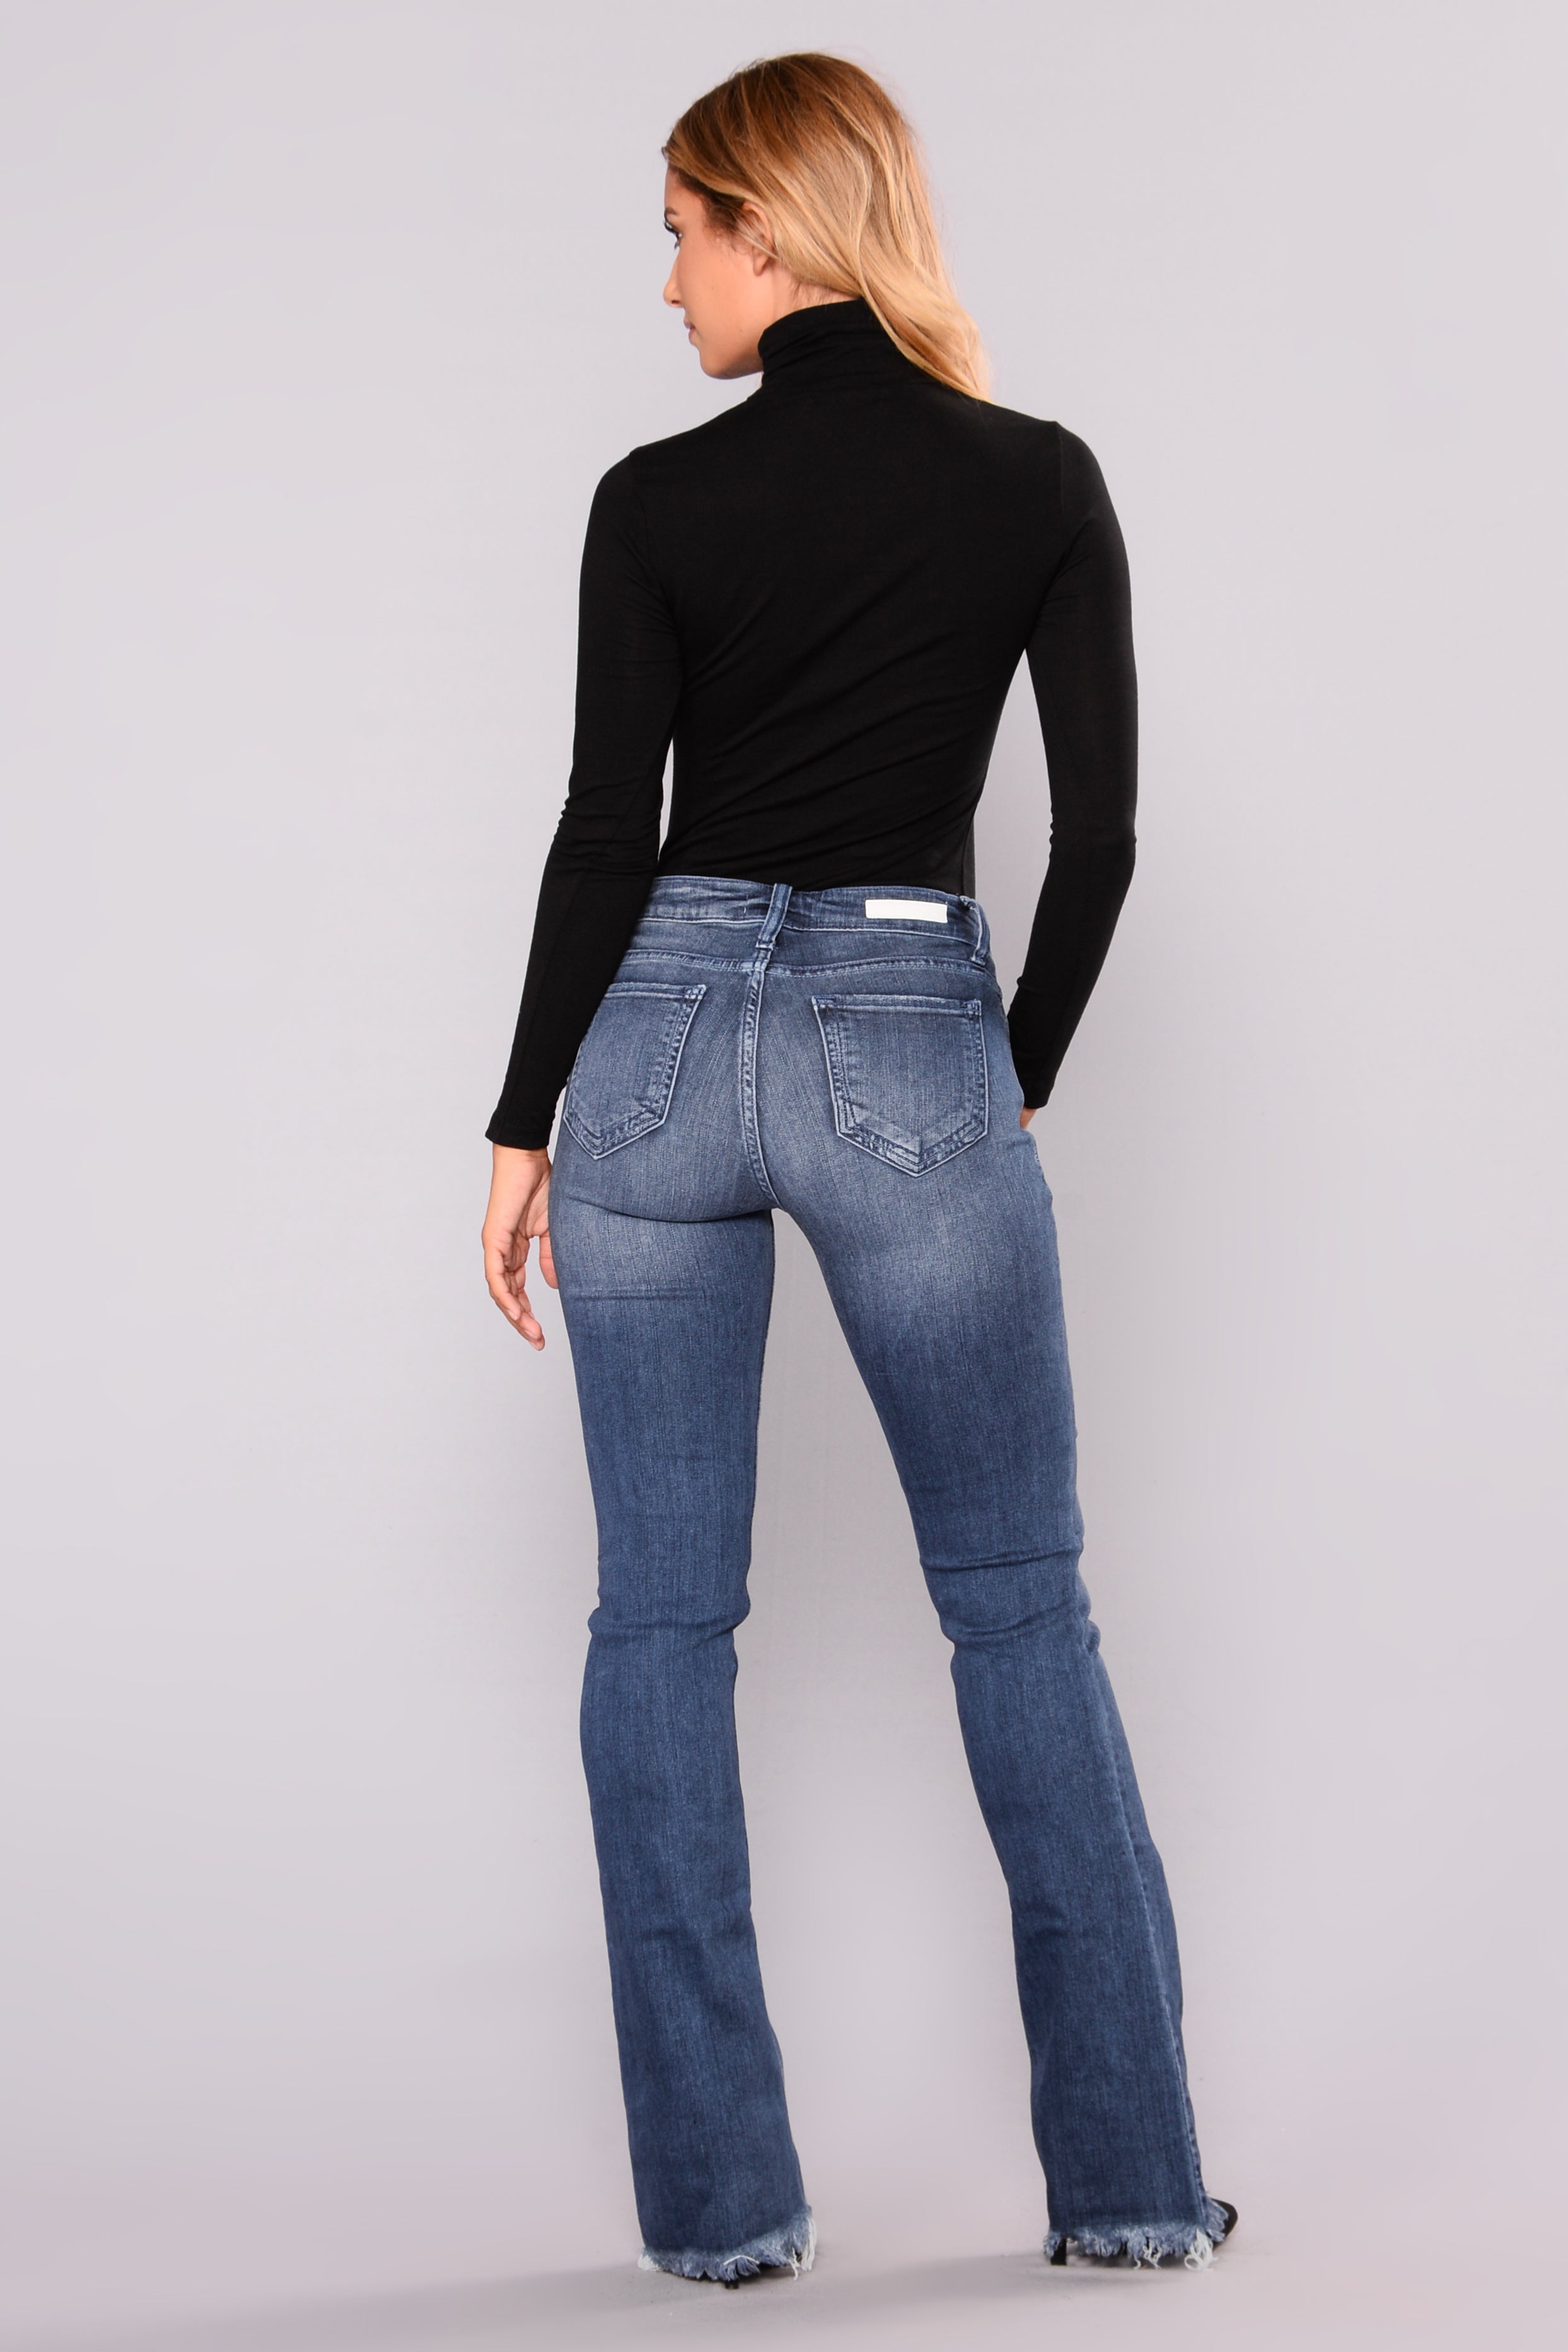 denim jean jumpsuits for women plus size rayon